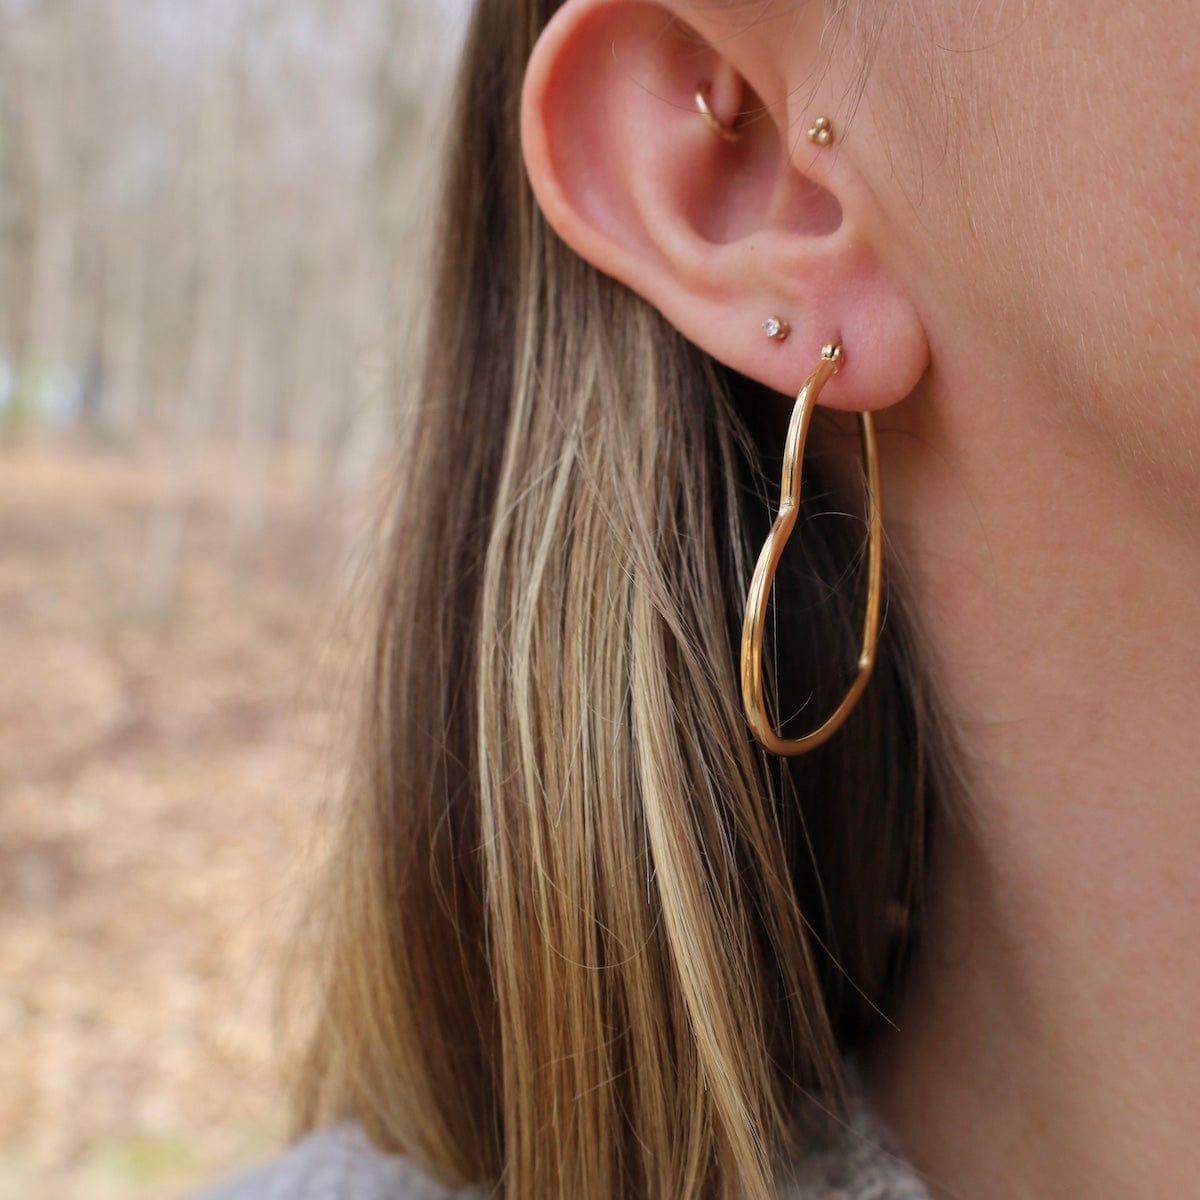 EAR-GPL AGLAE // The Hearts hoop earrings - 18k gold plate